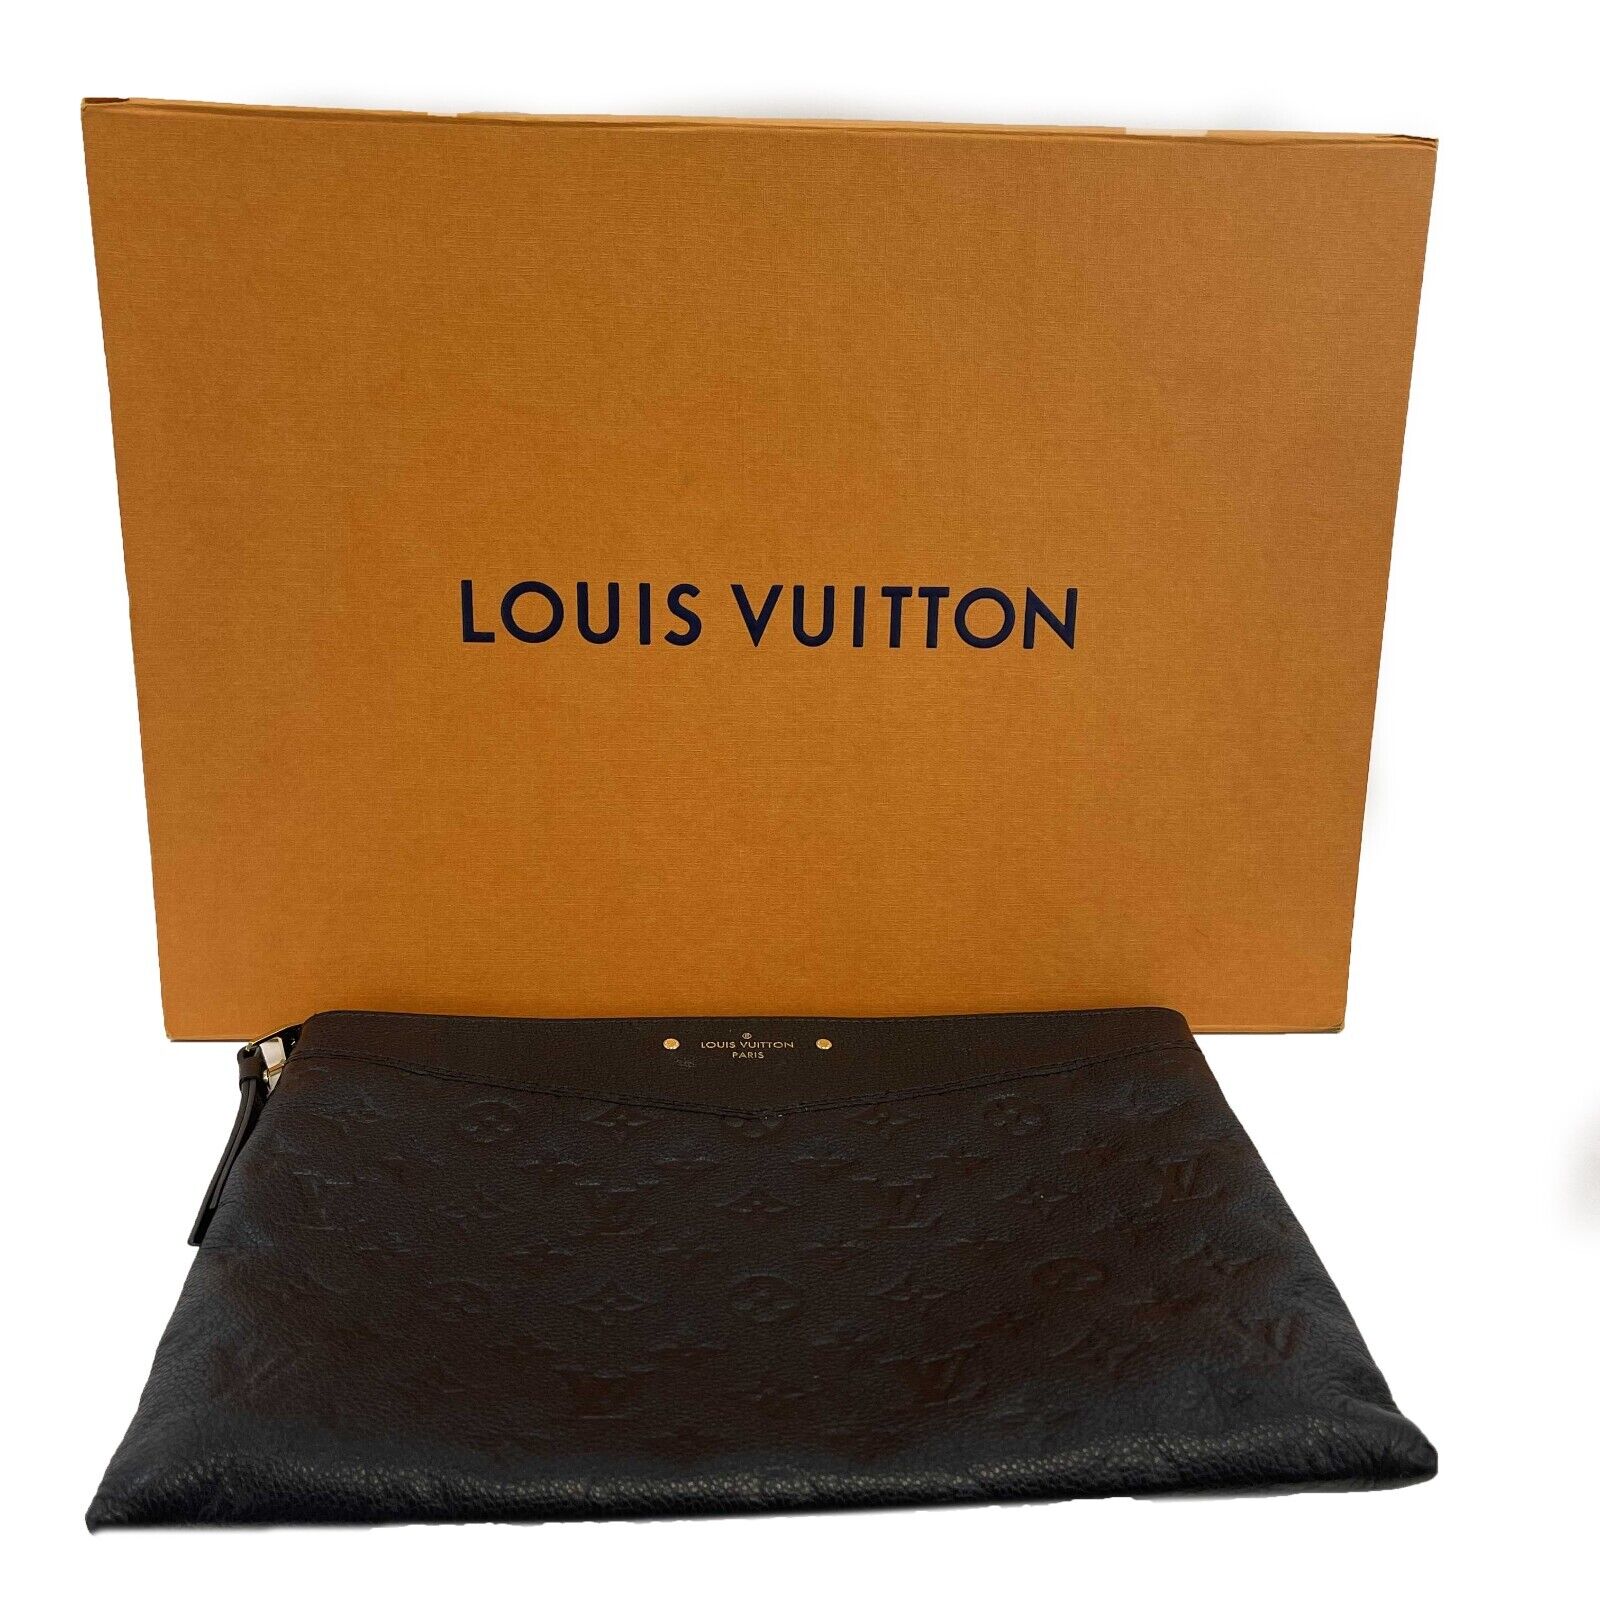 Louis Vuitton - LV - Daily Pouch in Monogram Black Empreinte